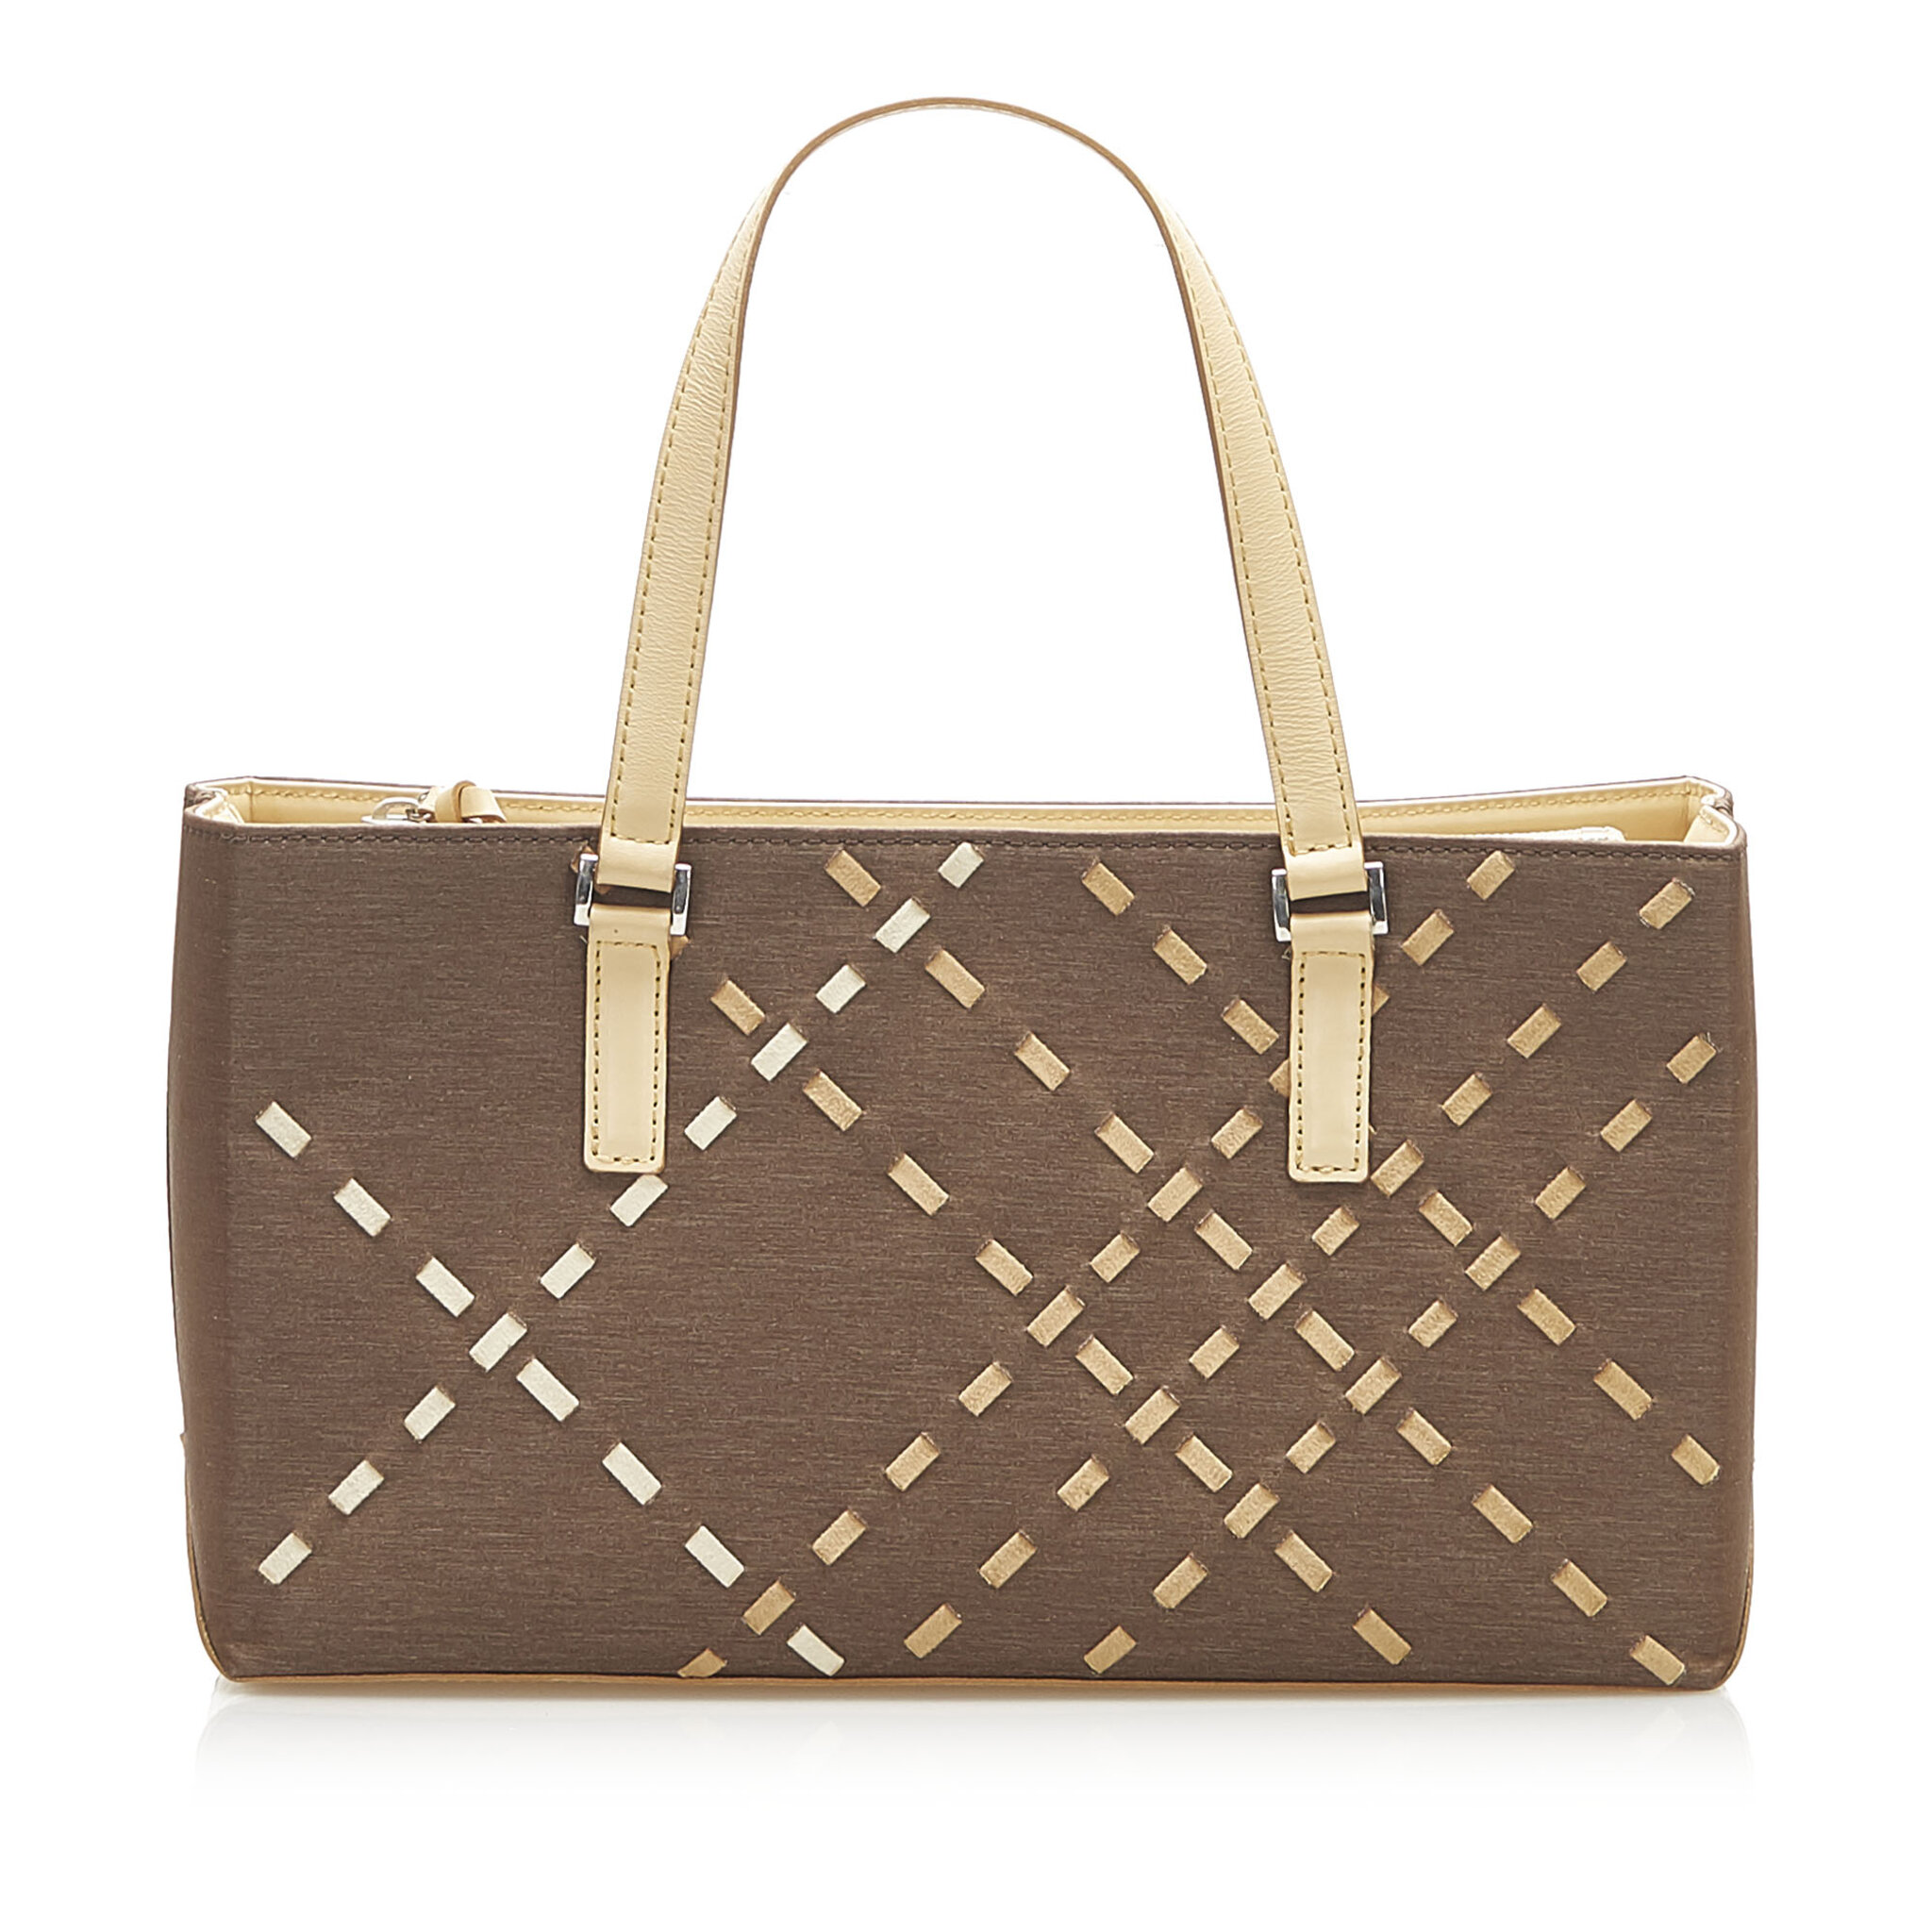 Burberry Canvas Handbag, brown, dark brown